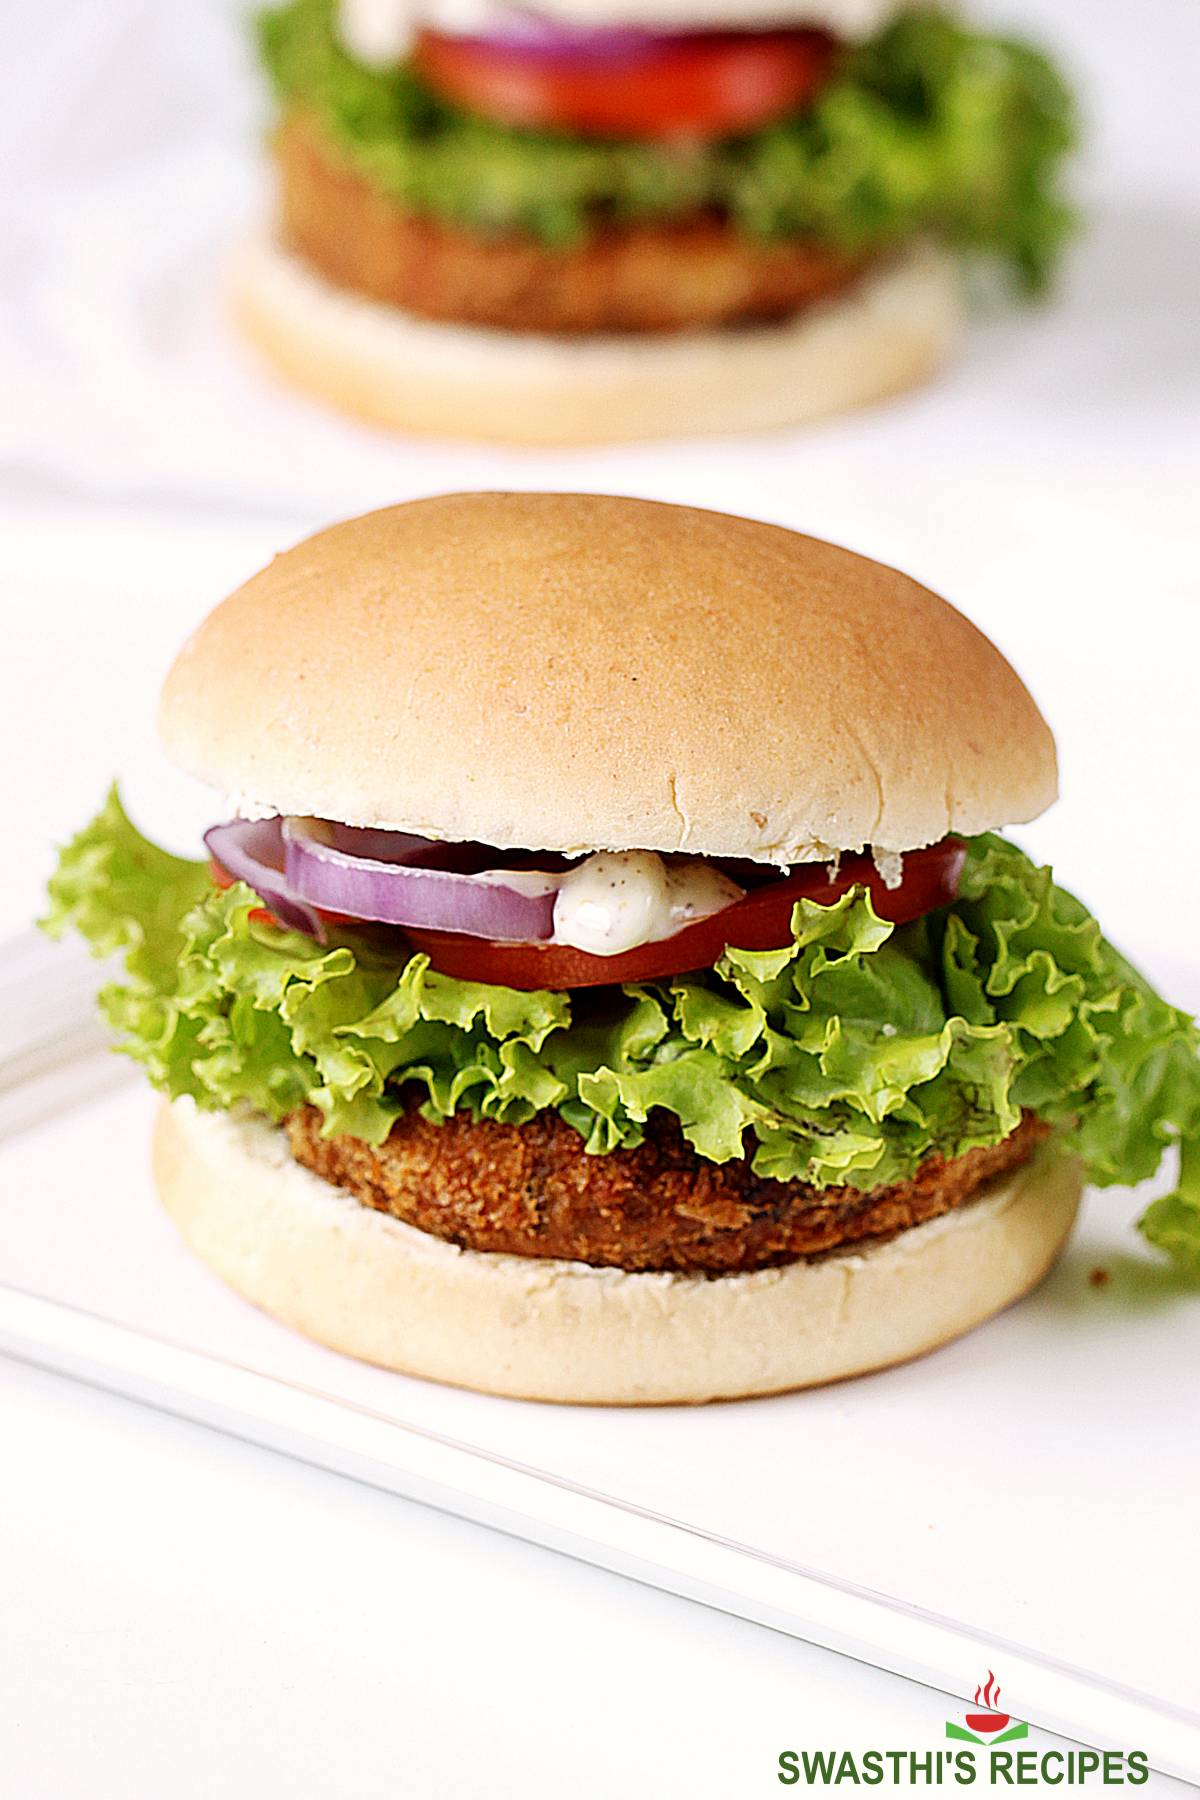 10 Best Veggie Burger Brands in 2022 - Top Plant-Based Burgers